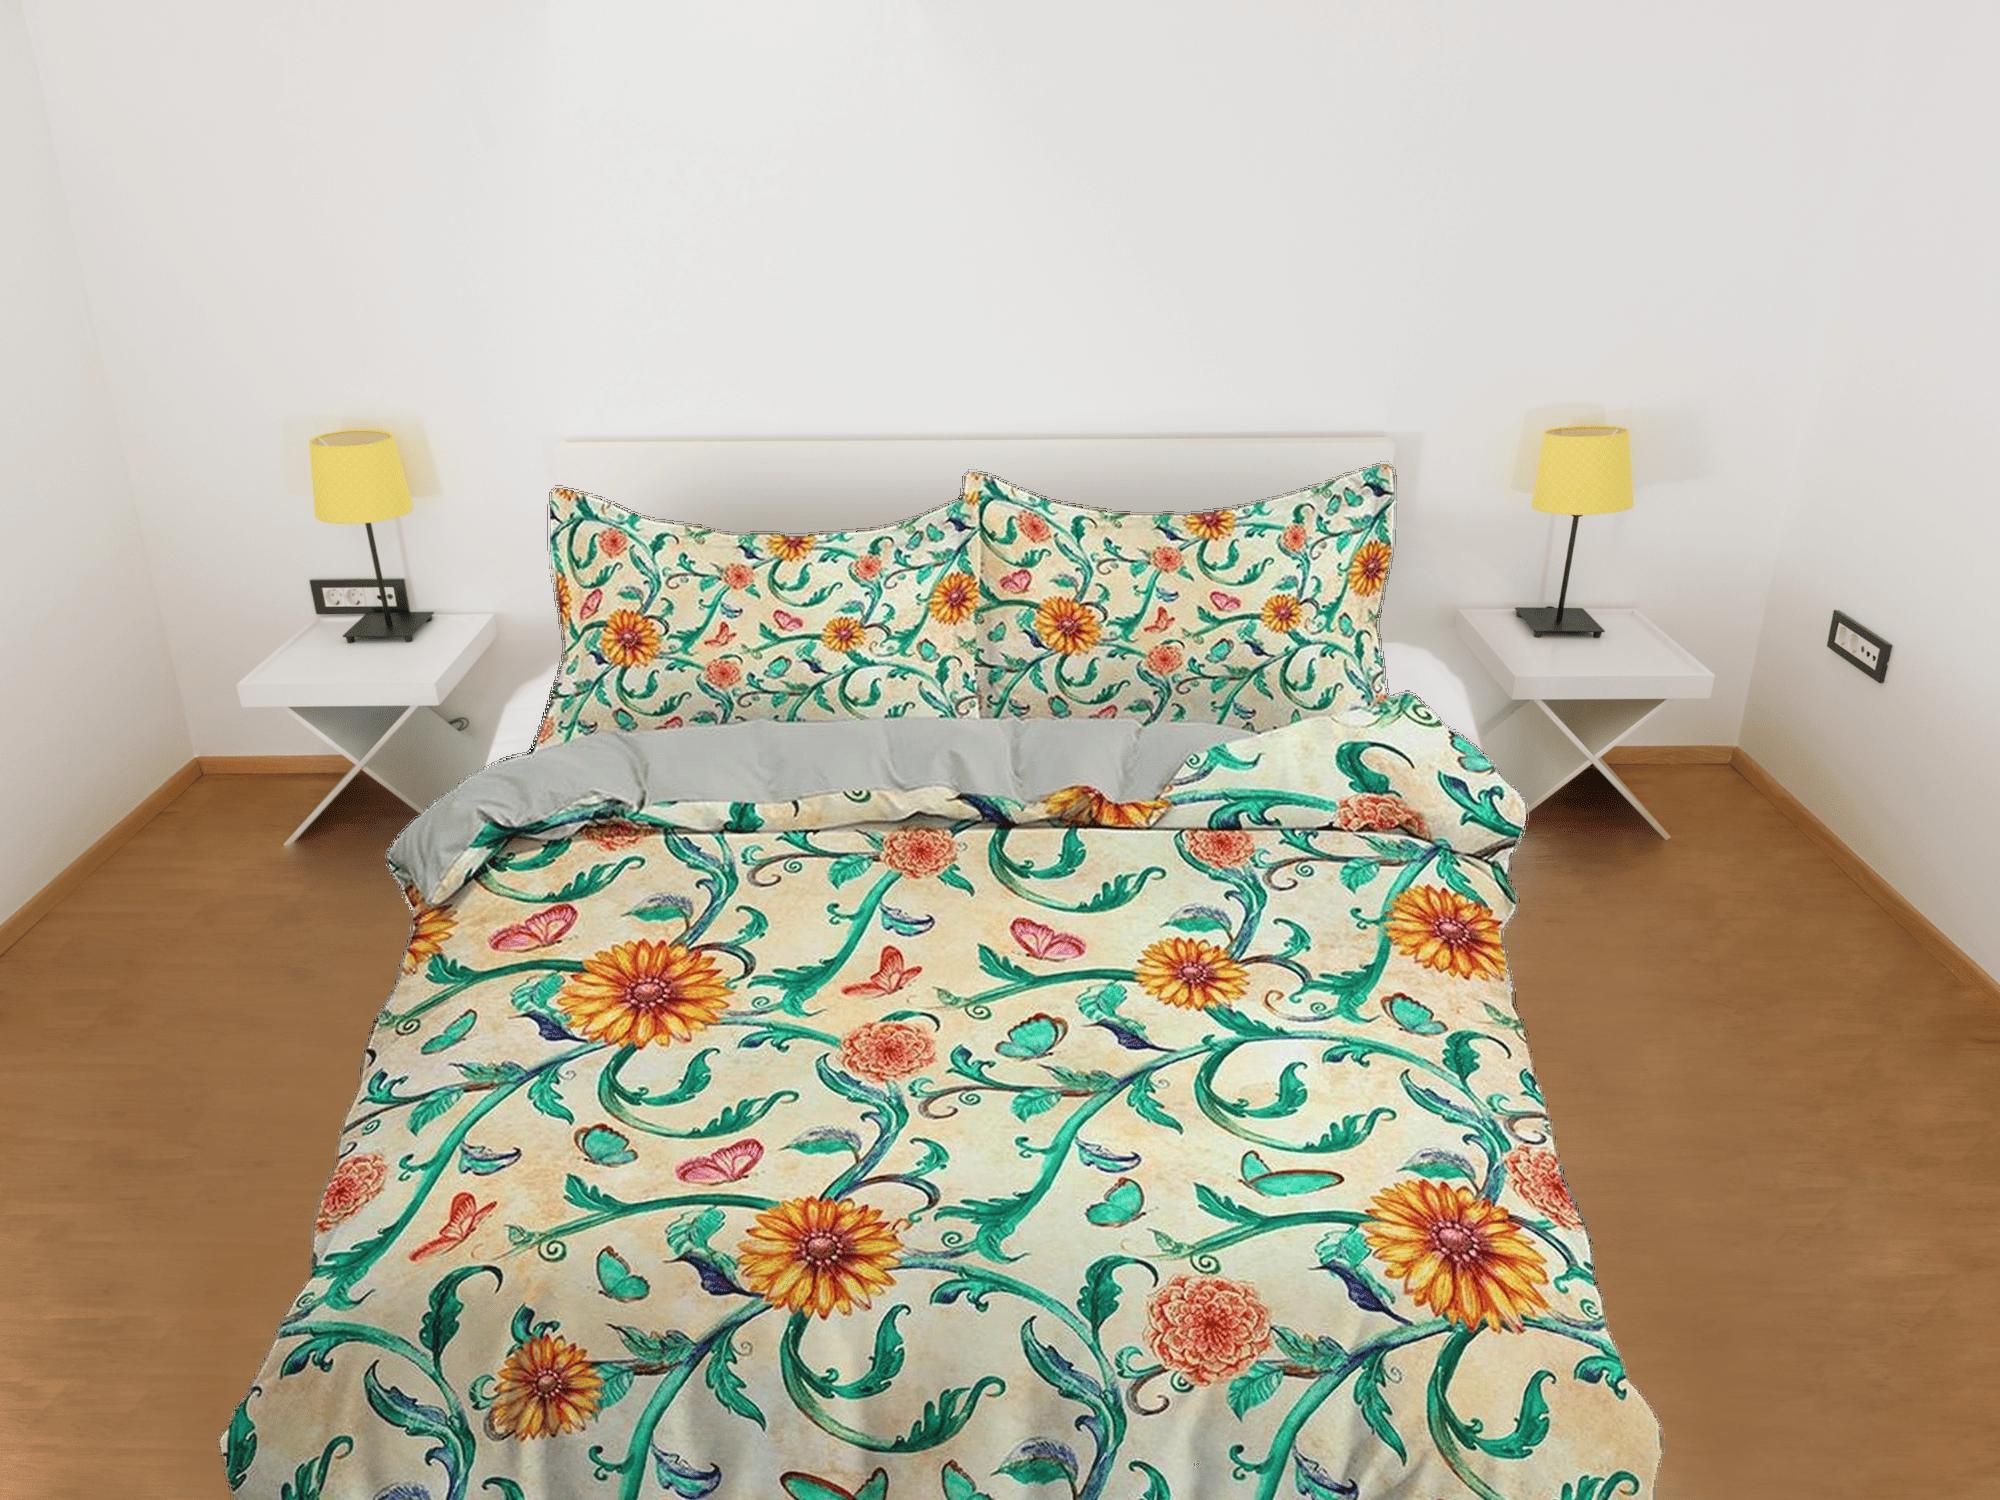 daintyduvet Yellow flower and vines floral bedding, boho duvet cover queen, king, designer shabby chic bedding, aesthetic bedding full size maximalist